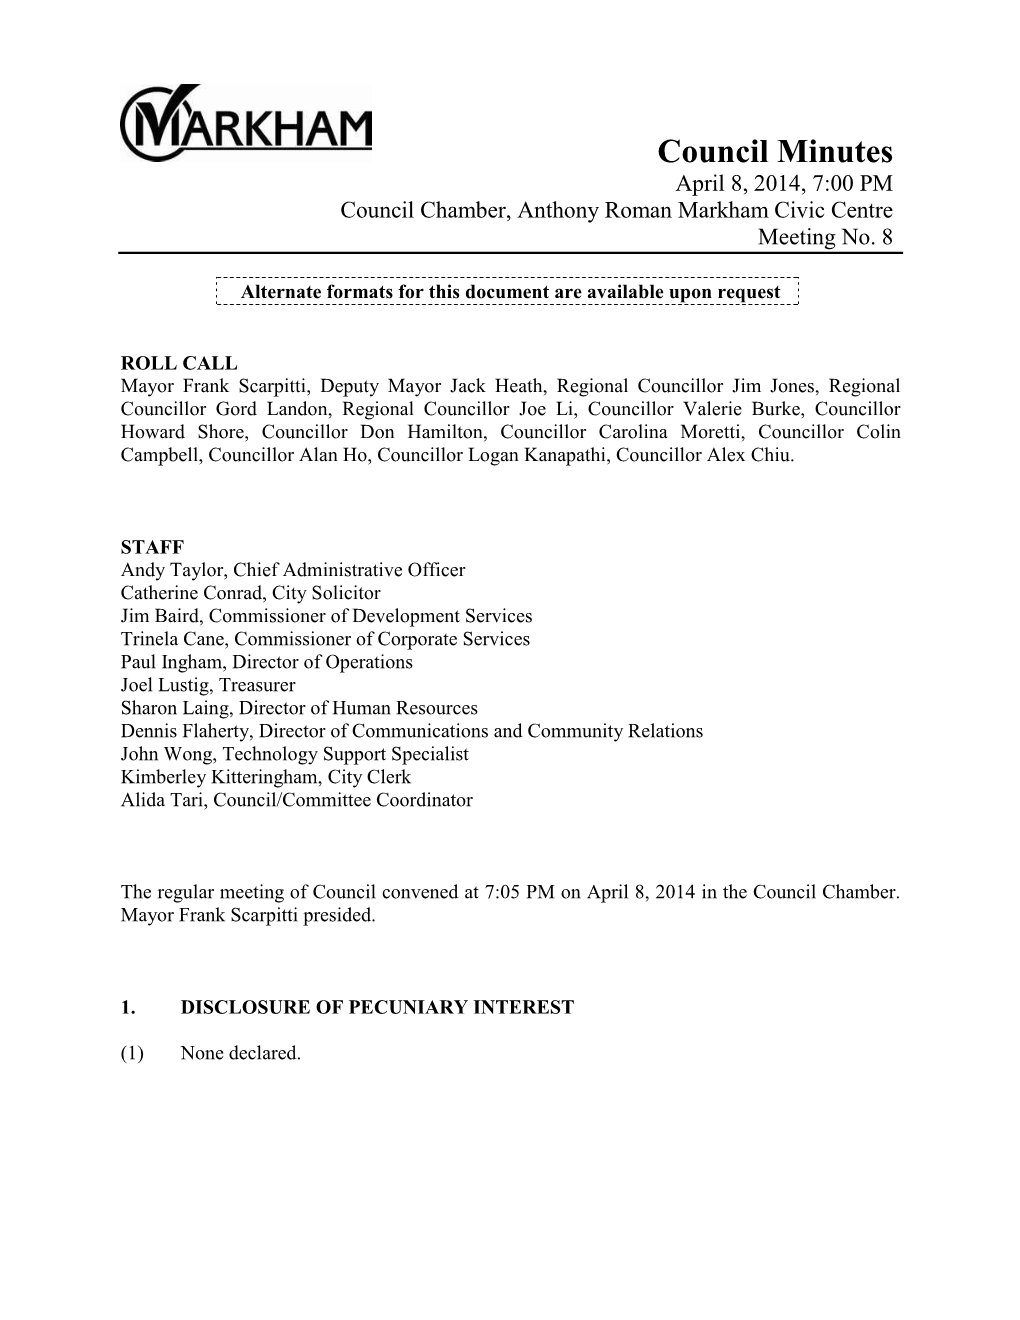 Council Minutes April 8, 2014, 7:00 PM Council Chamber, Anthony Roman Markham Civic Centre Meeting No